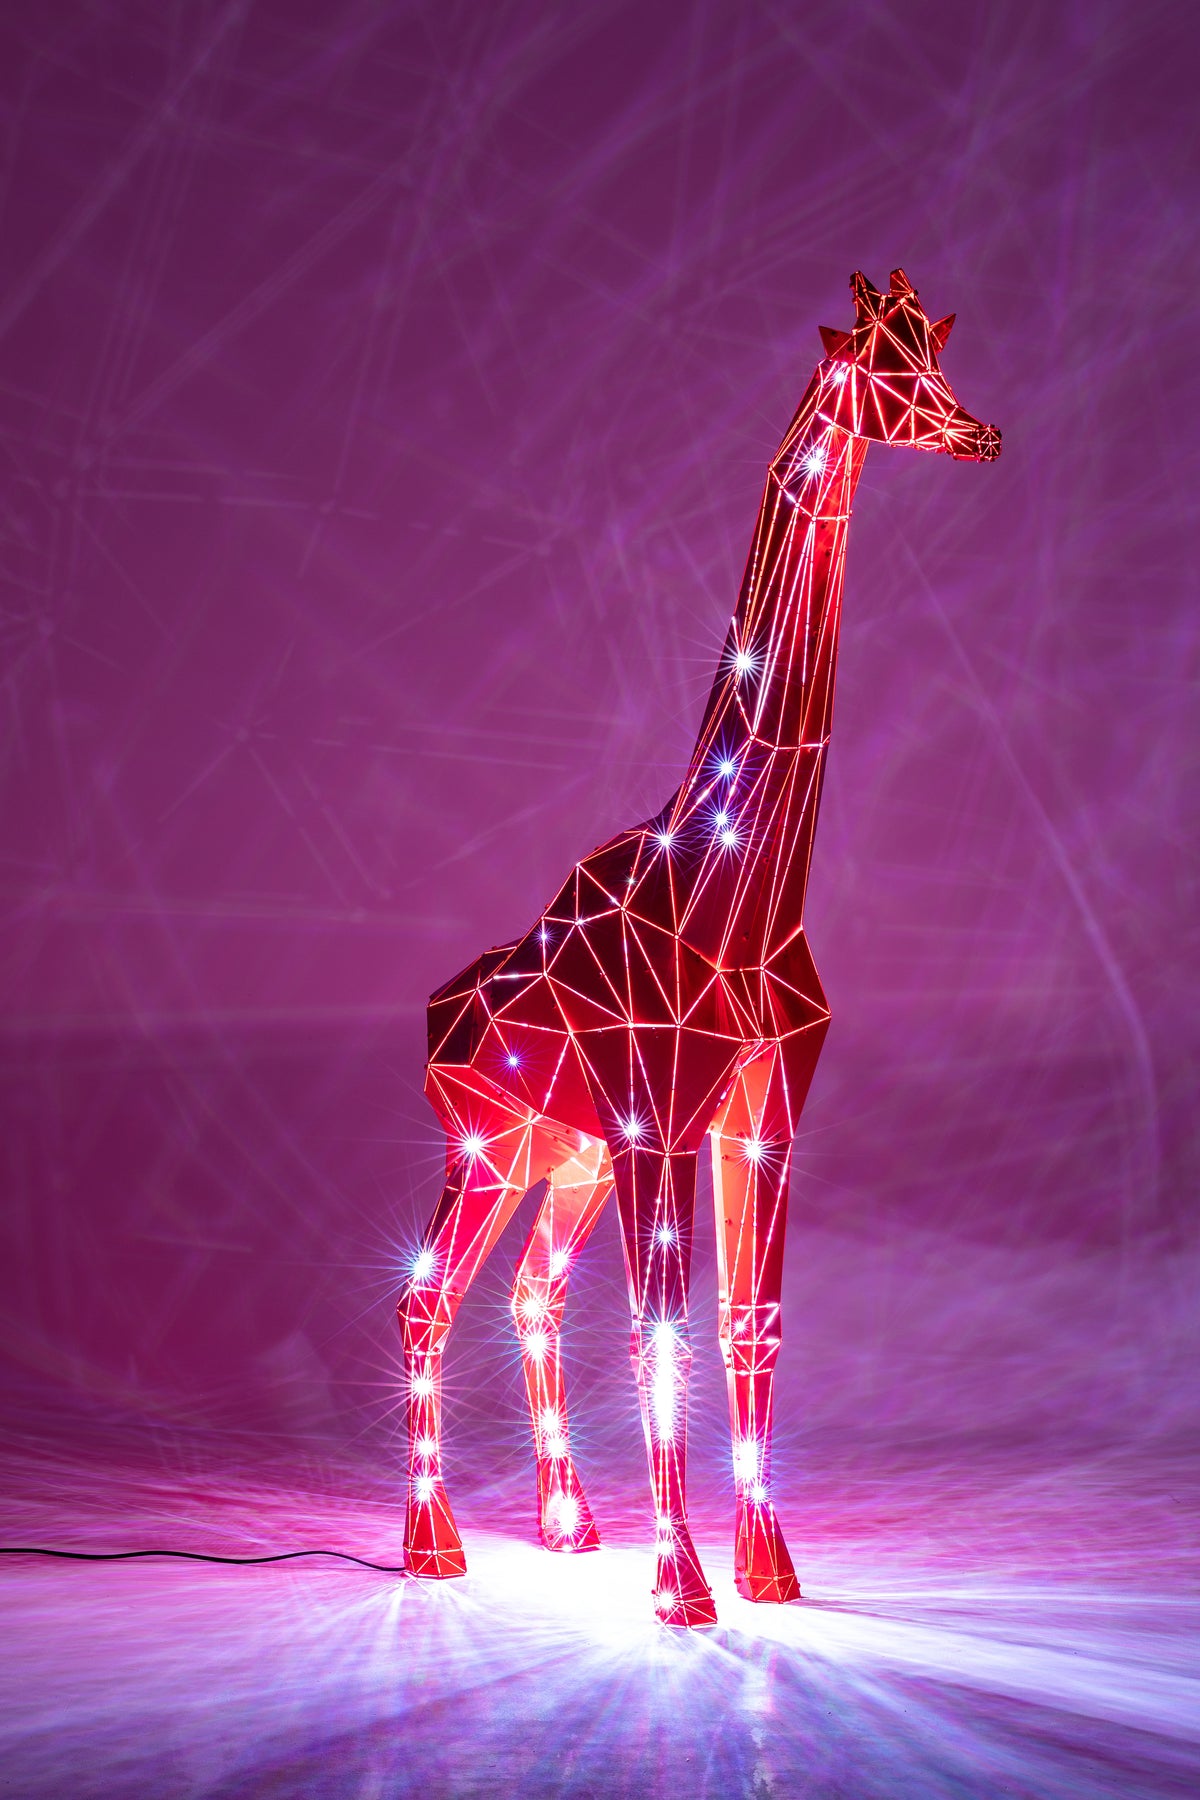 Giraffe with remote control - Bouffee Cloud